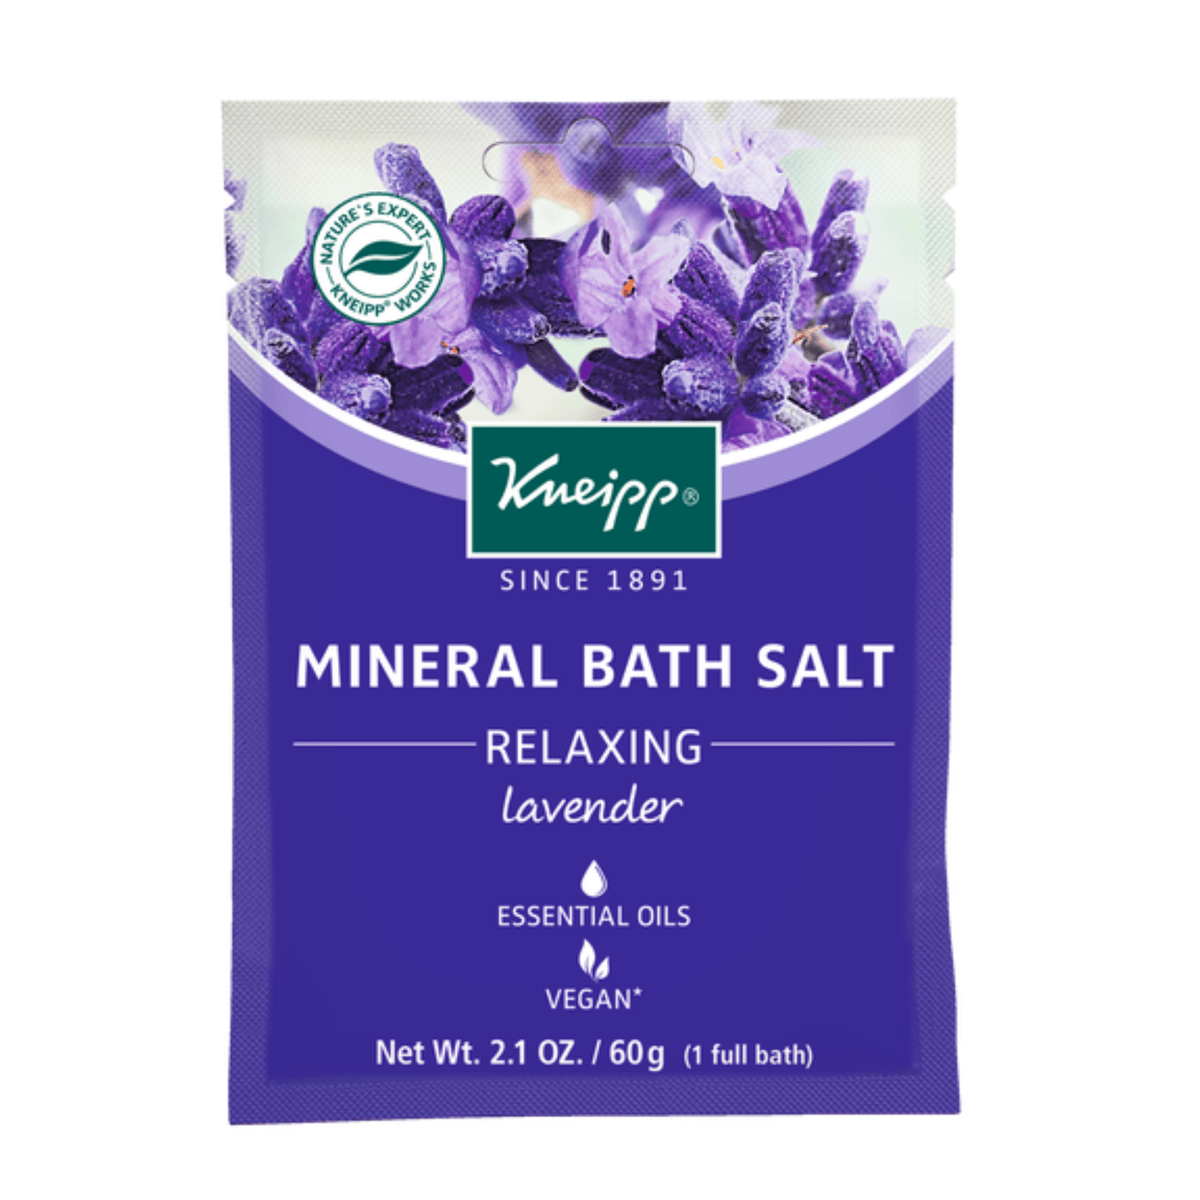 Primary Image of Lavender Relaxing Mineral Bath Salt Sachet